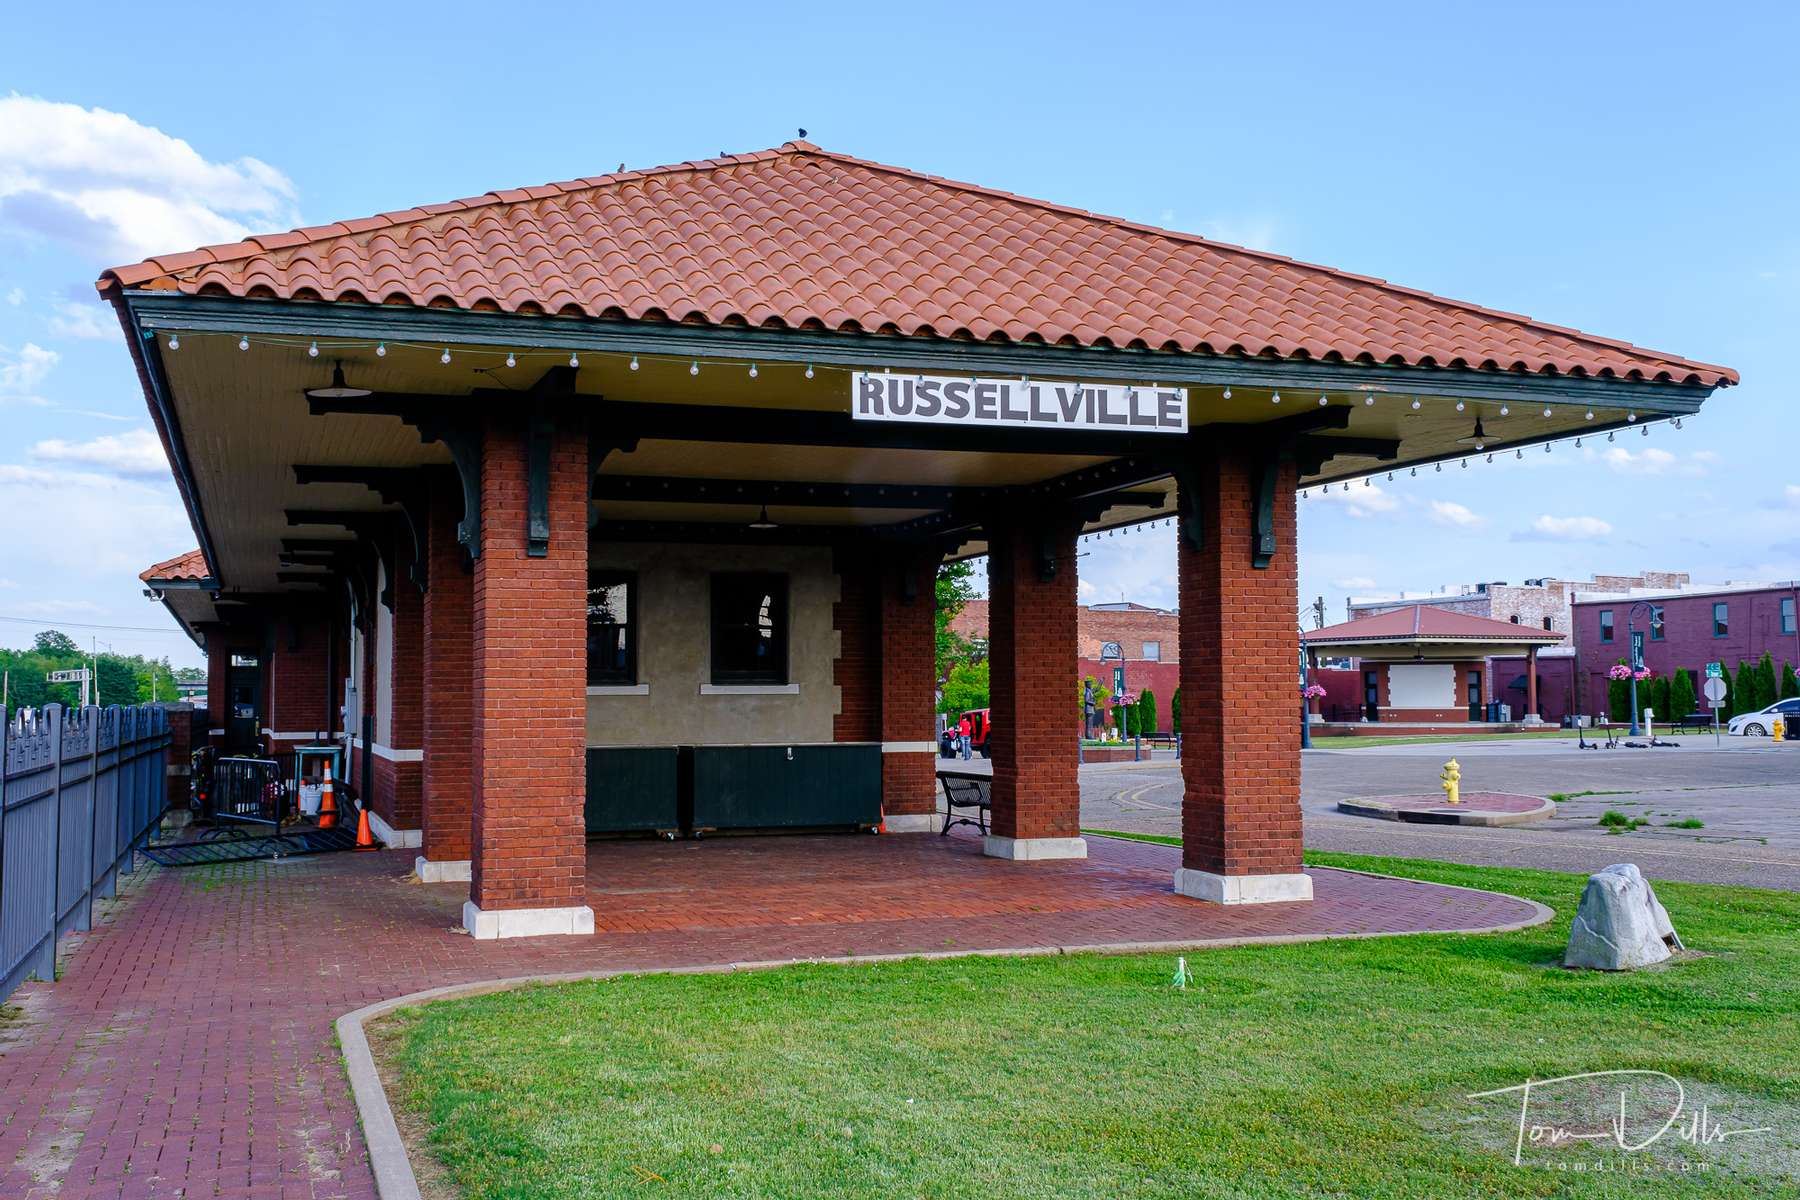 Train station in downtown Russellville, Arkansas